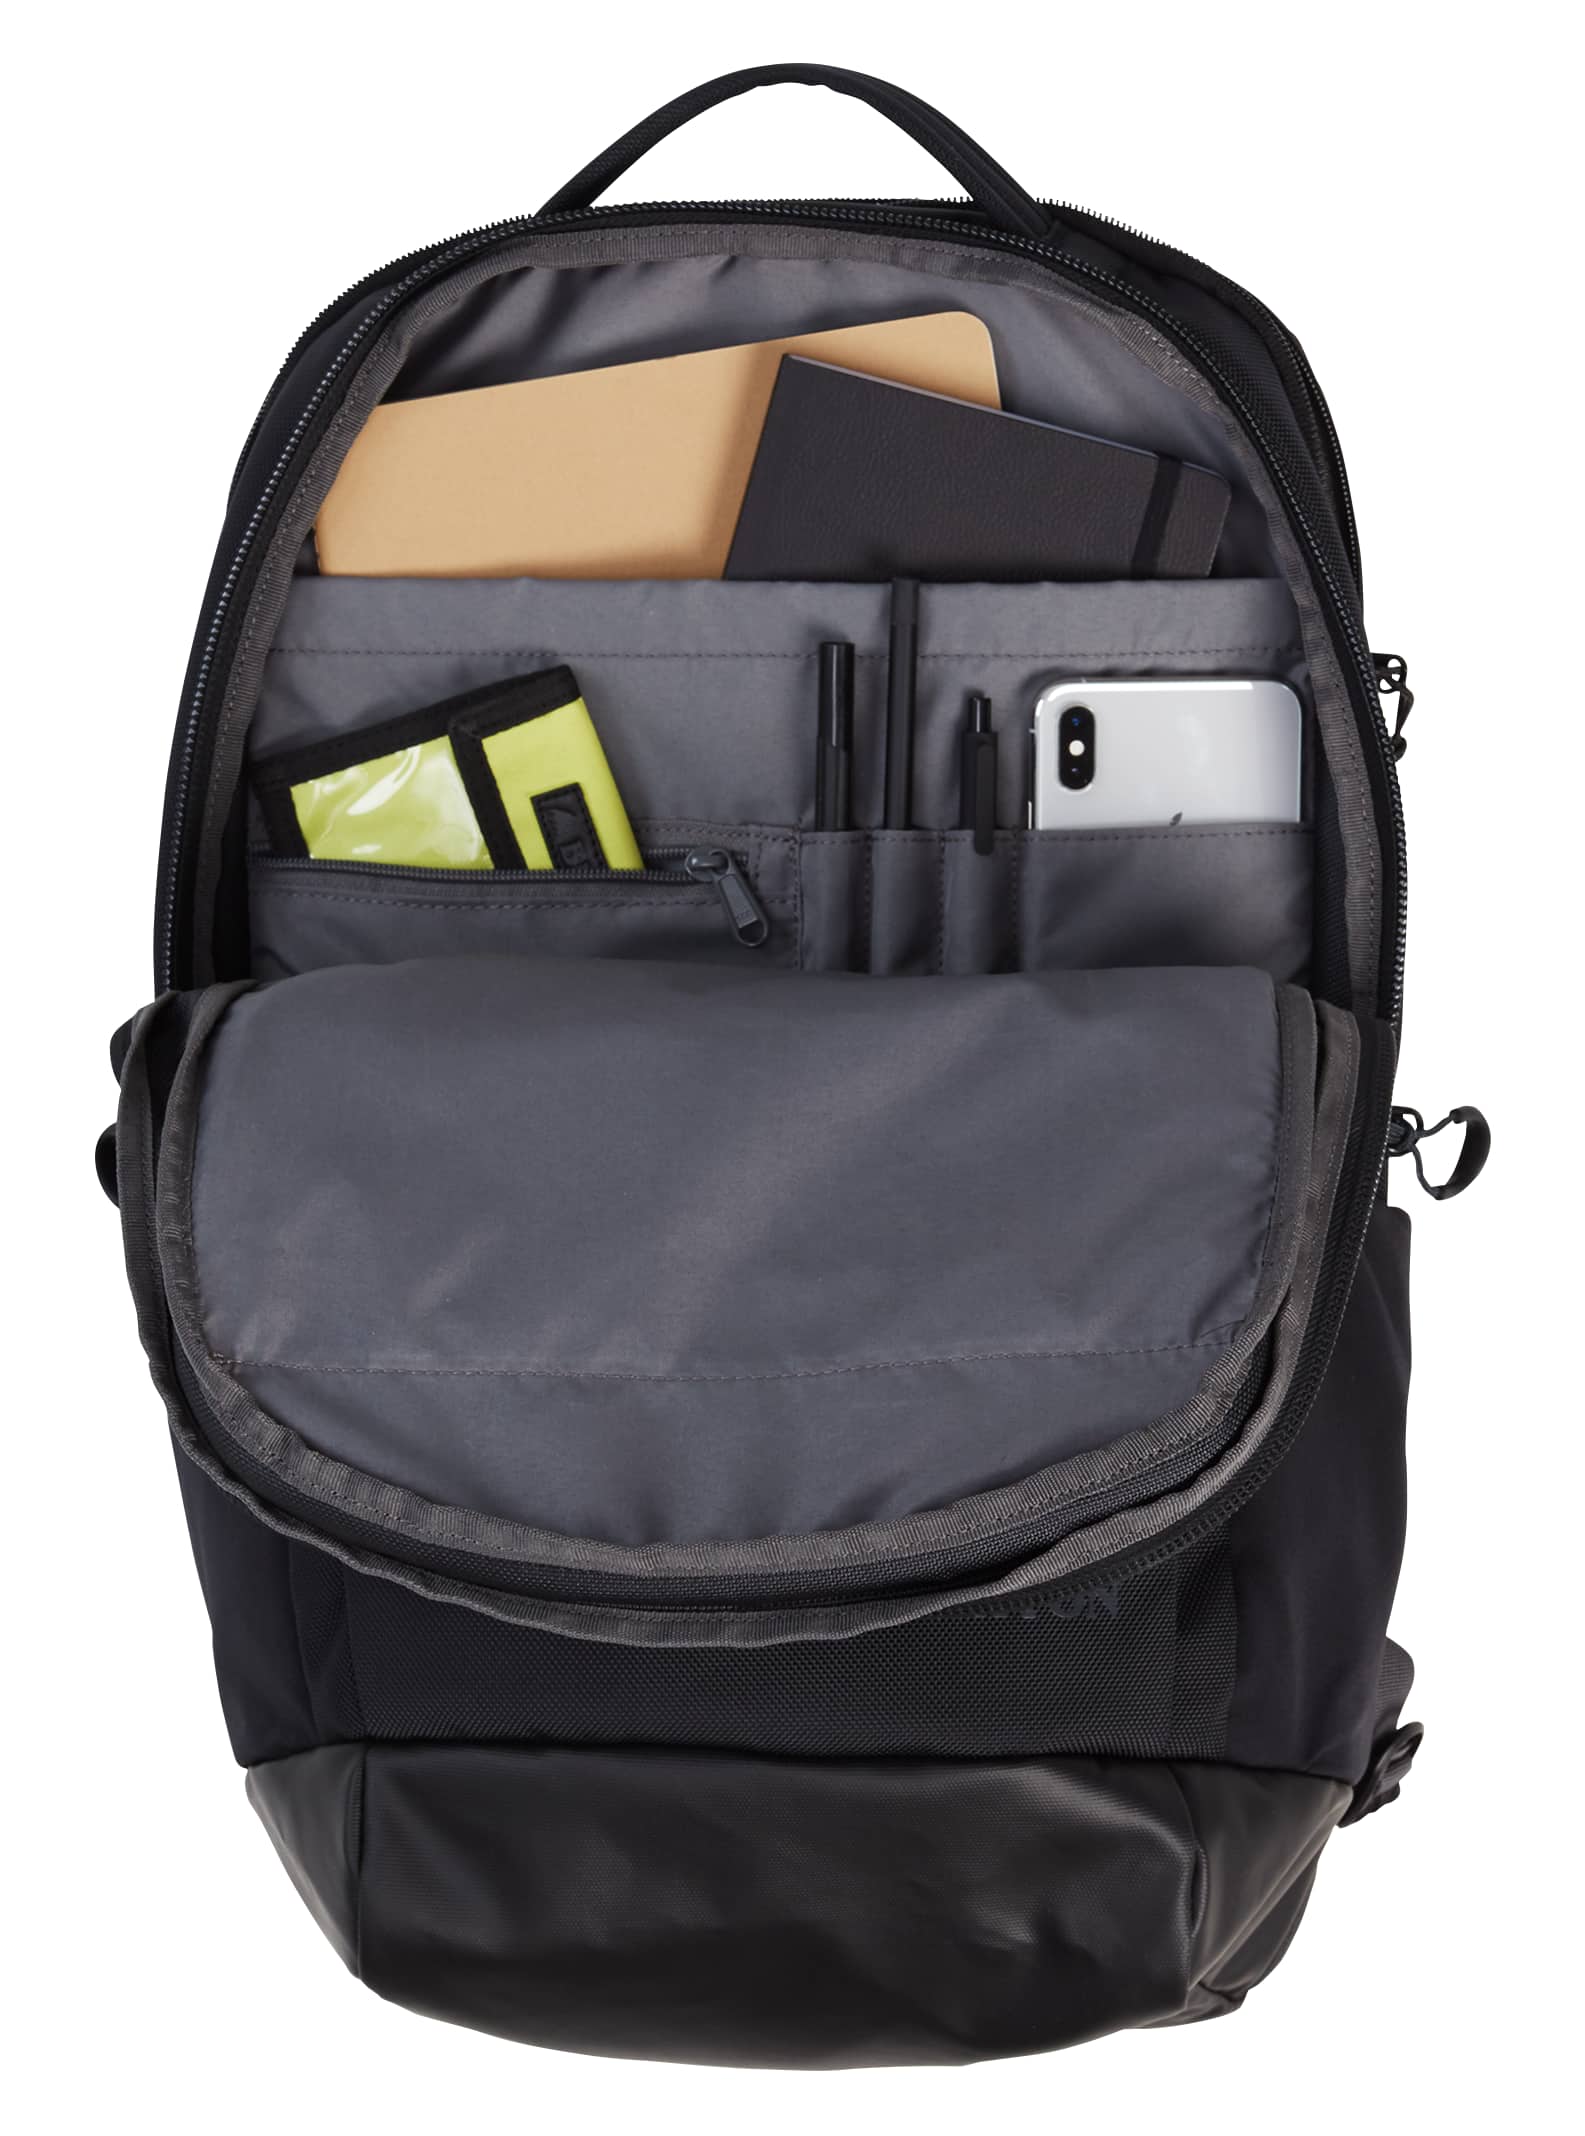 Burton Multipath 25L Backpack | Burton.com Winter 2021 US